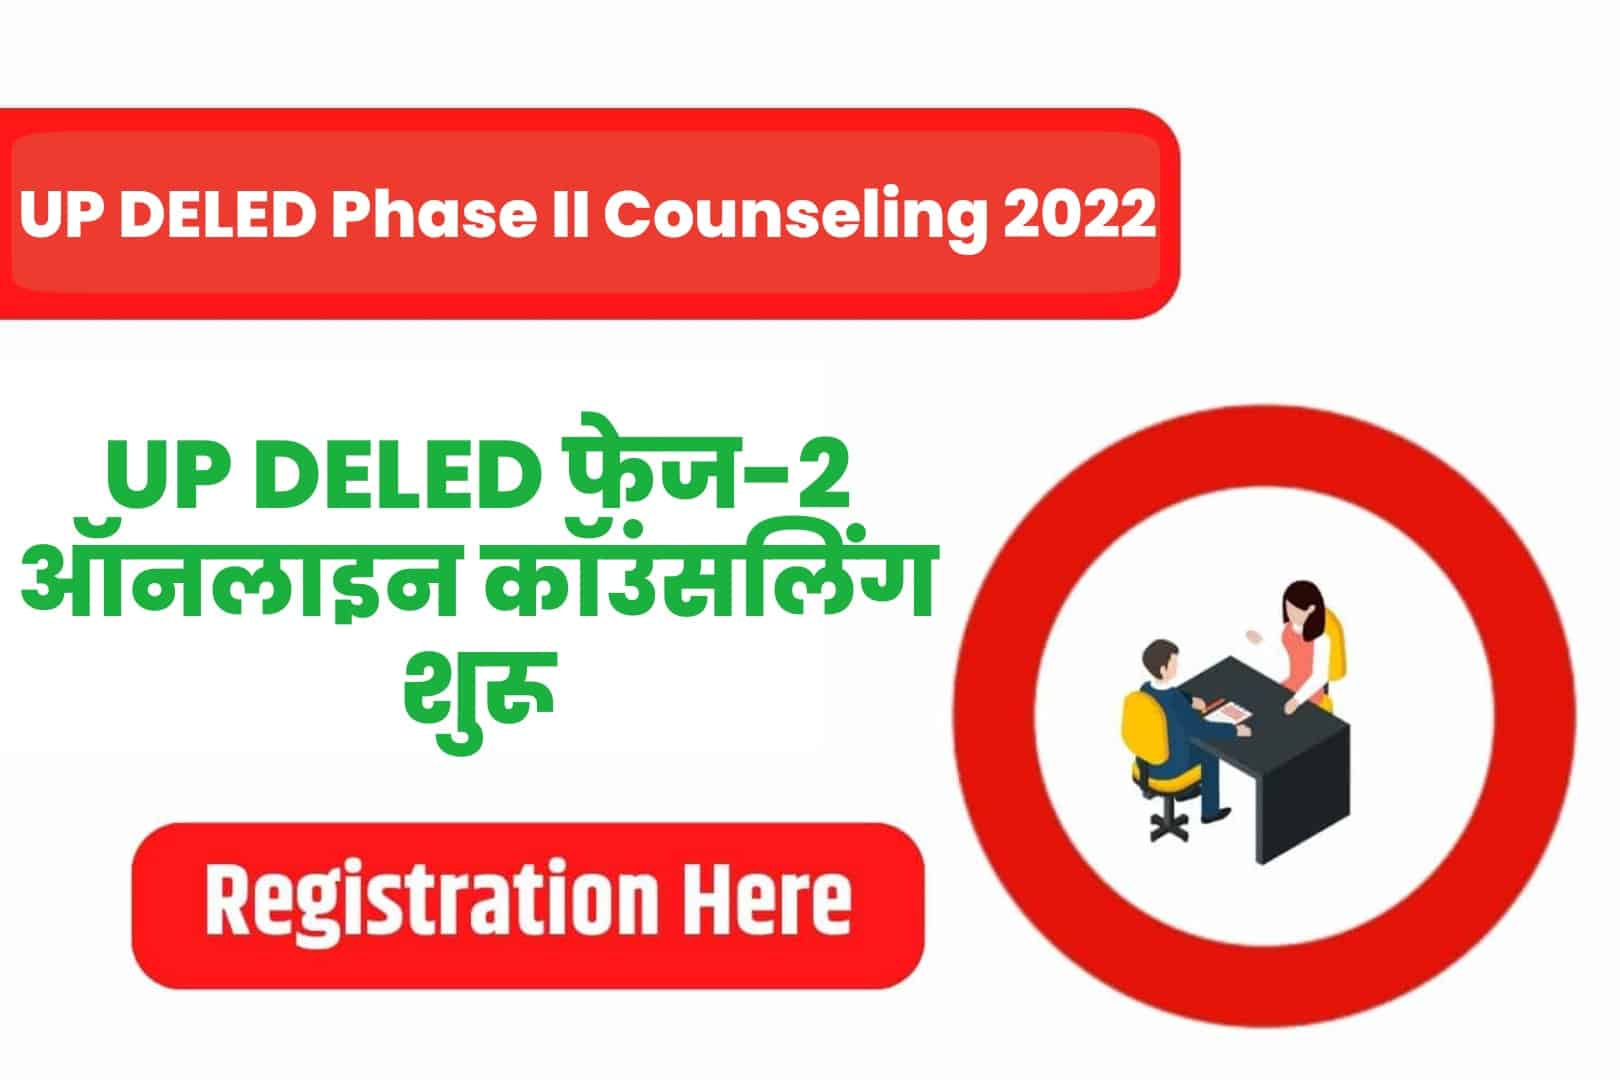 UP DELED Phase II Online Counseling 2022 | उत्तर प्रदेश डीइएलइडी फेज-2 ऑनलाइन कॉउंसलिंग 2022